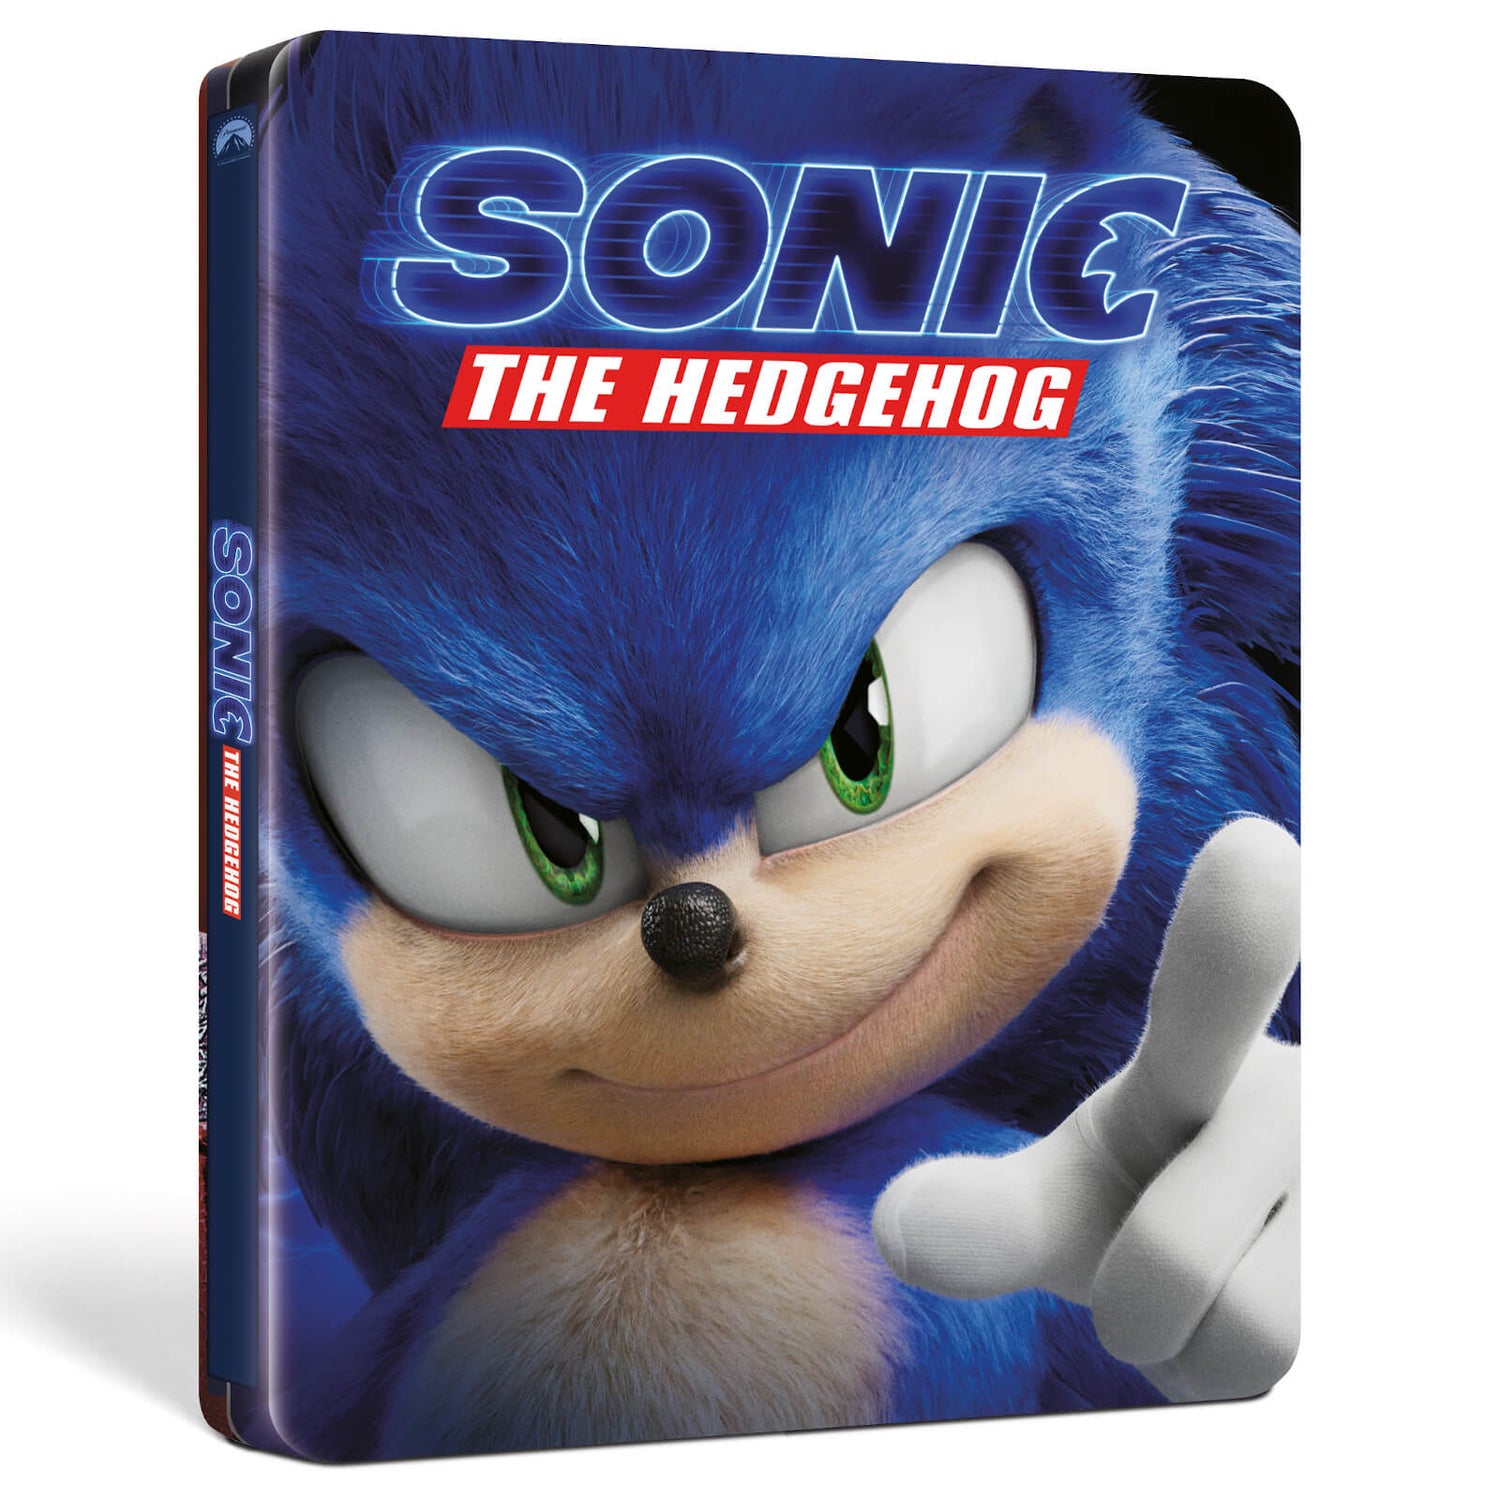 Buy Sonic the Hedgehog 4 - Episode II Steam Key GLOBAL - Cheap - !